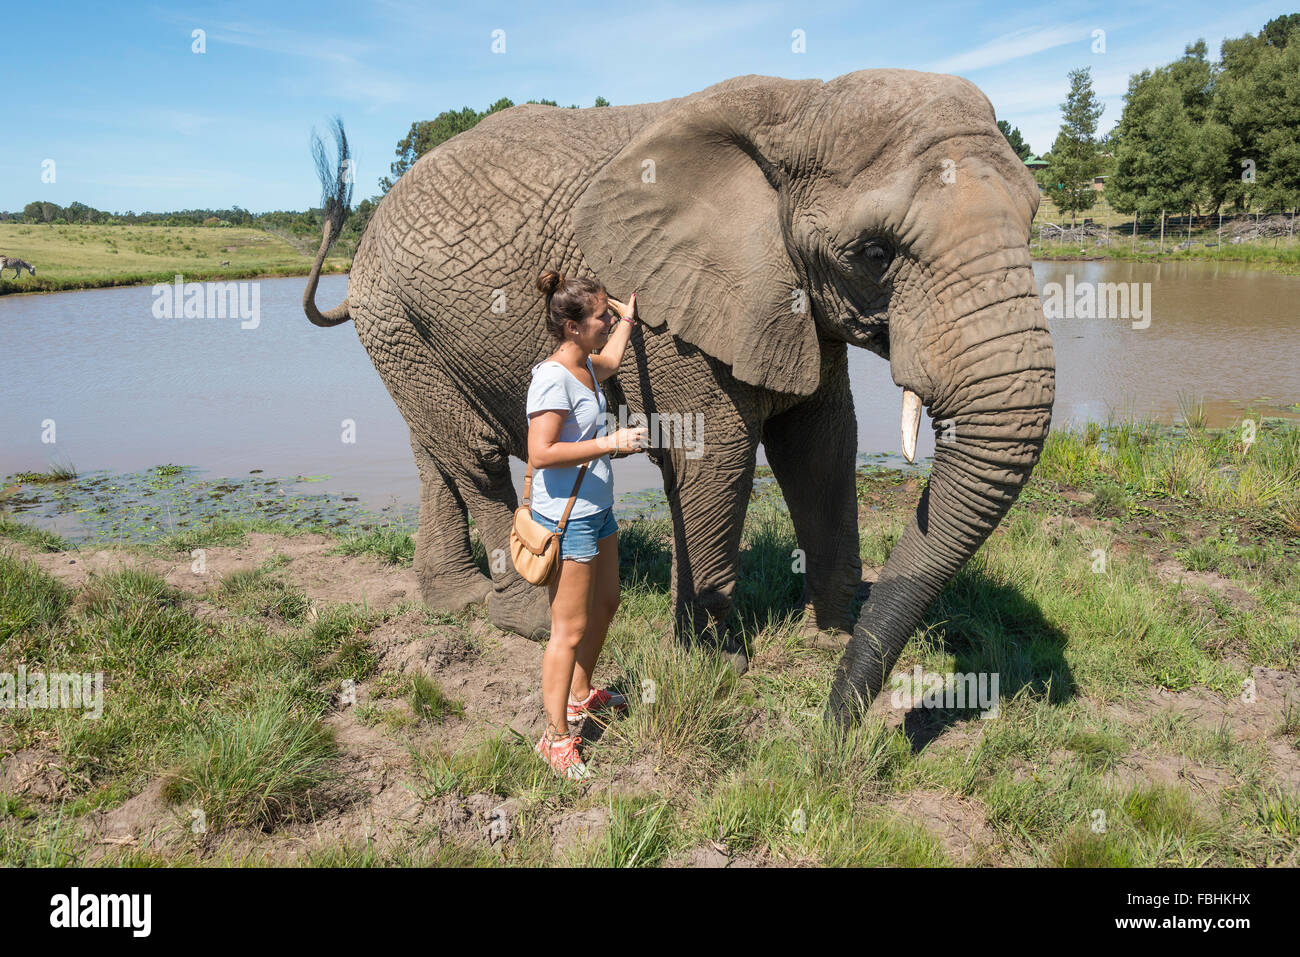 Woman with elephant at Knysna Elephant Park, Plettenberg Bay, Knysna, Knysna Municipality, Western Cape Province, South Africa Stock Photo